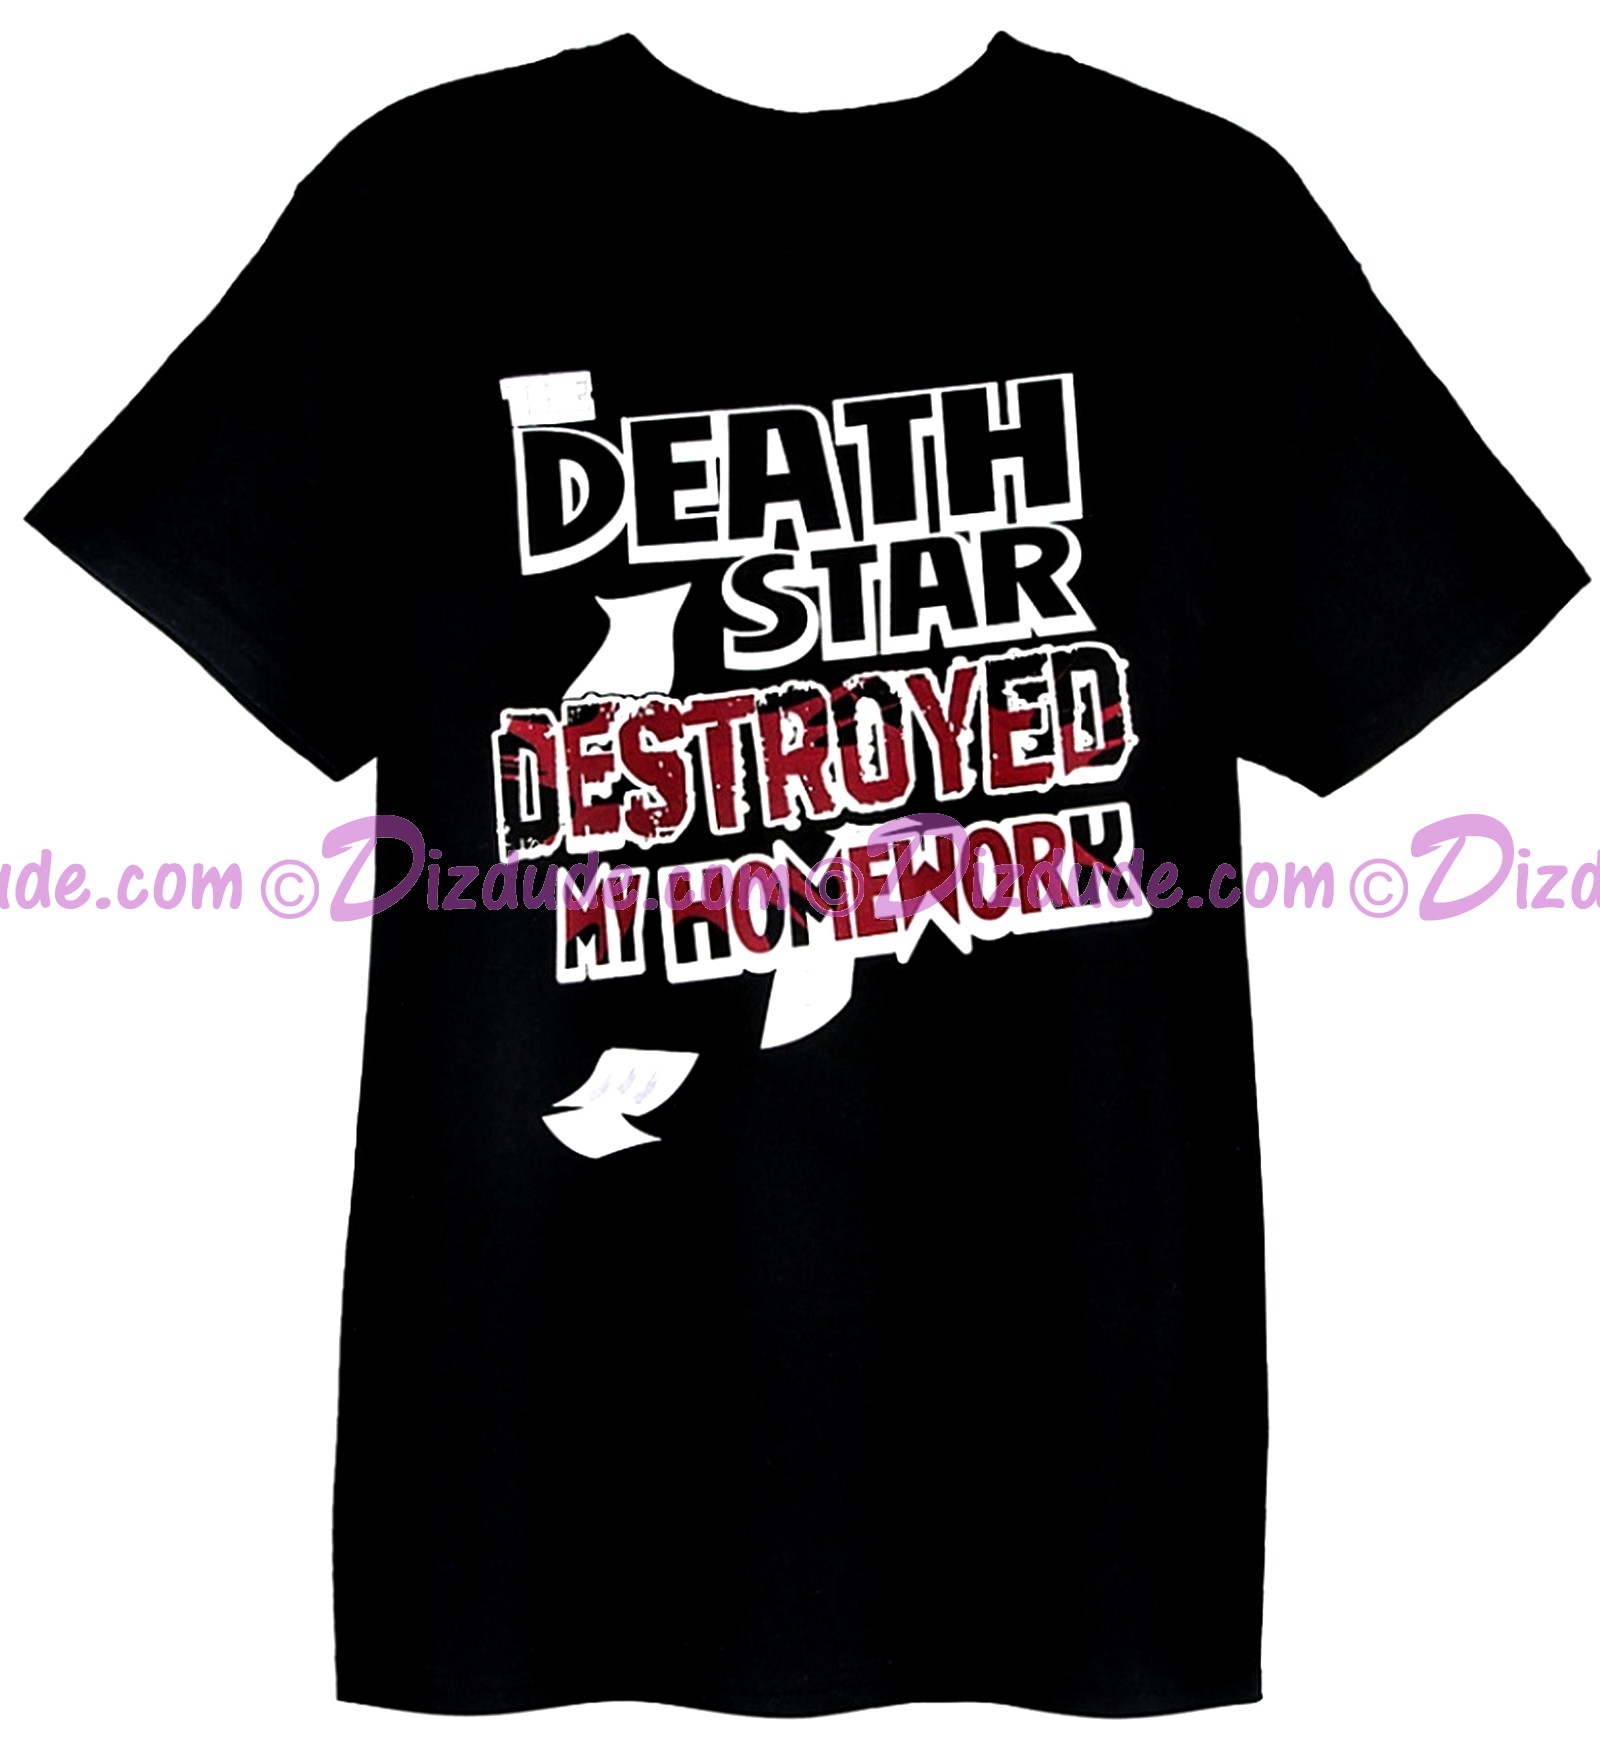 Vintage Star Wars Death Star Destroyed My Homework Youth T-Shirt (Tshirt, T shirt or Tee) © Dizdude.com